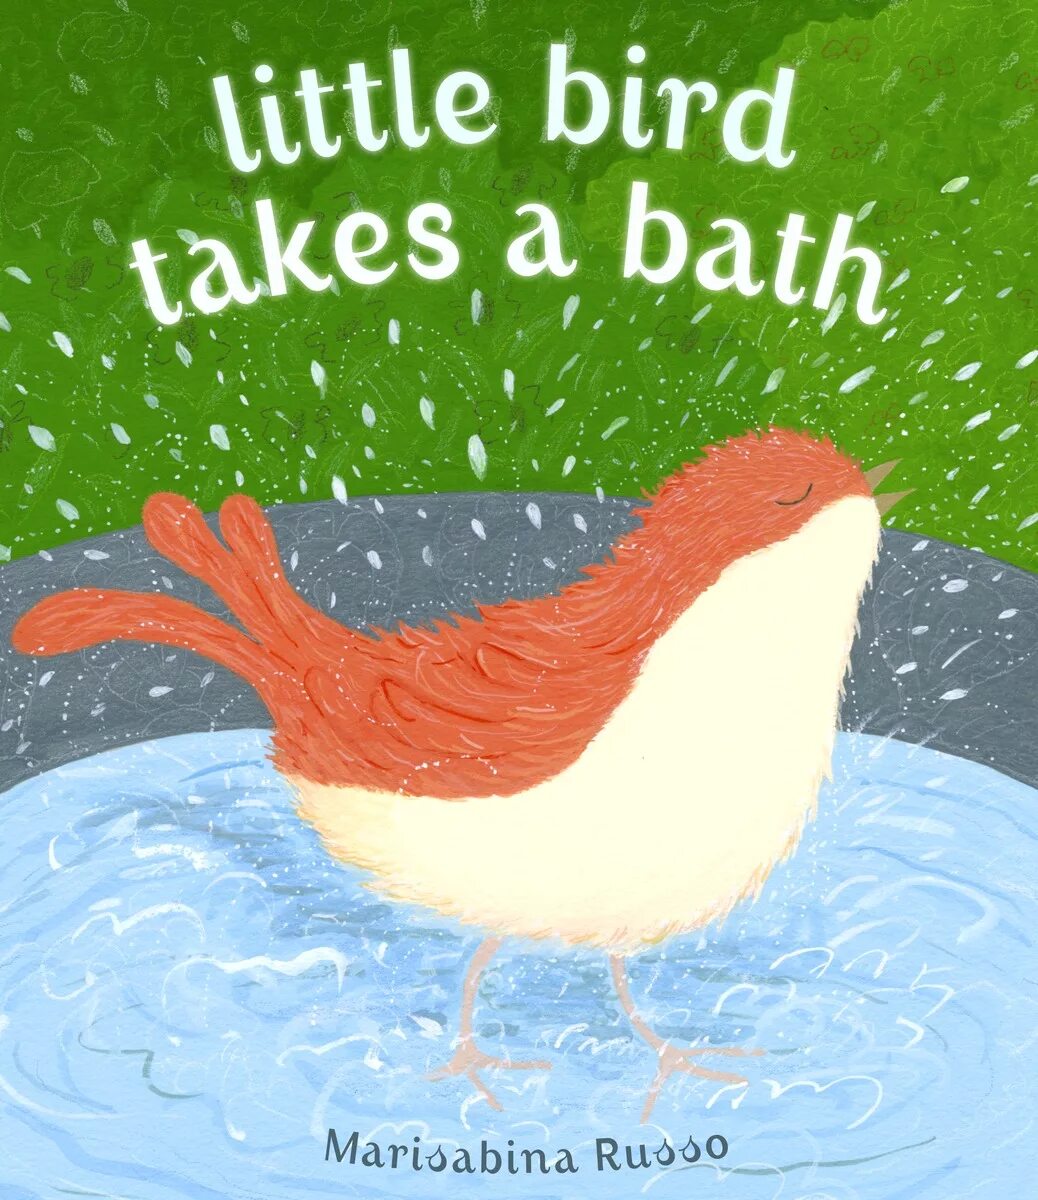 Take bird. Birds take a Bath. Little Birdies in the Air.